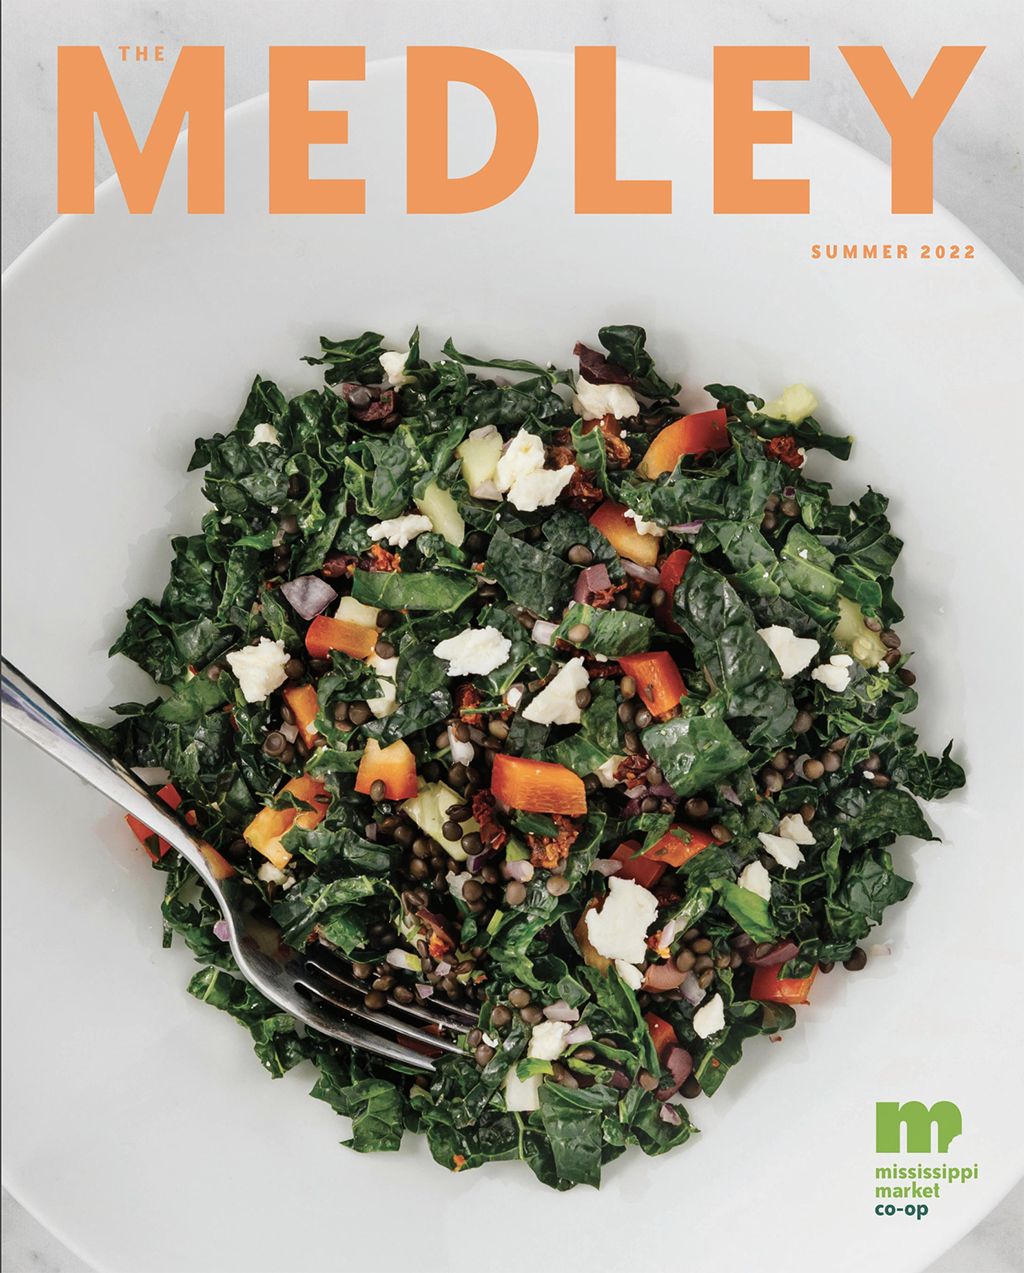 The Medley Cover Image Mediterranean salad